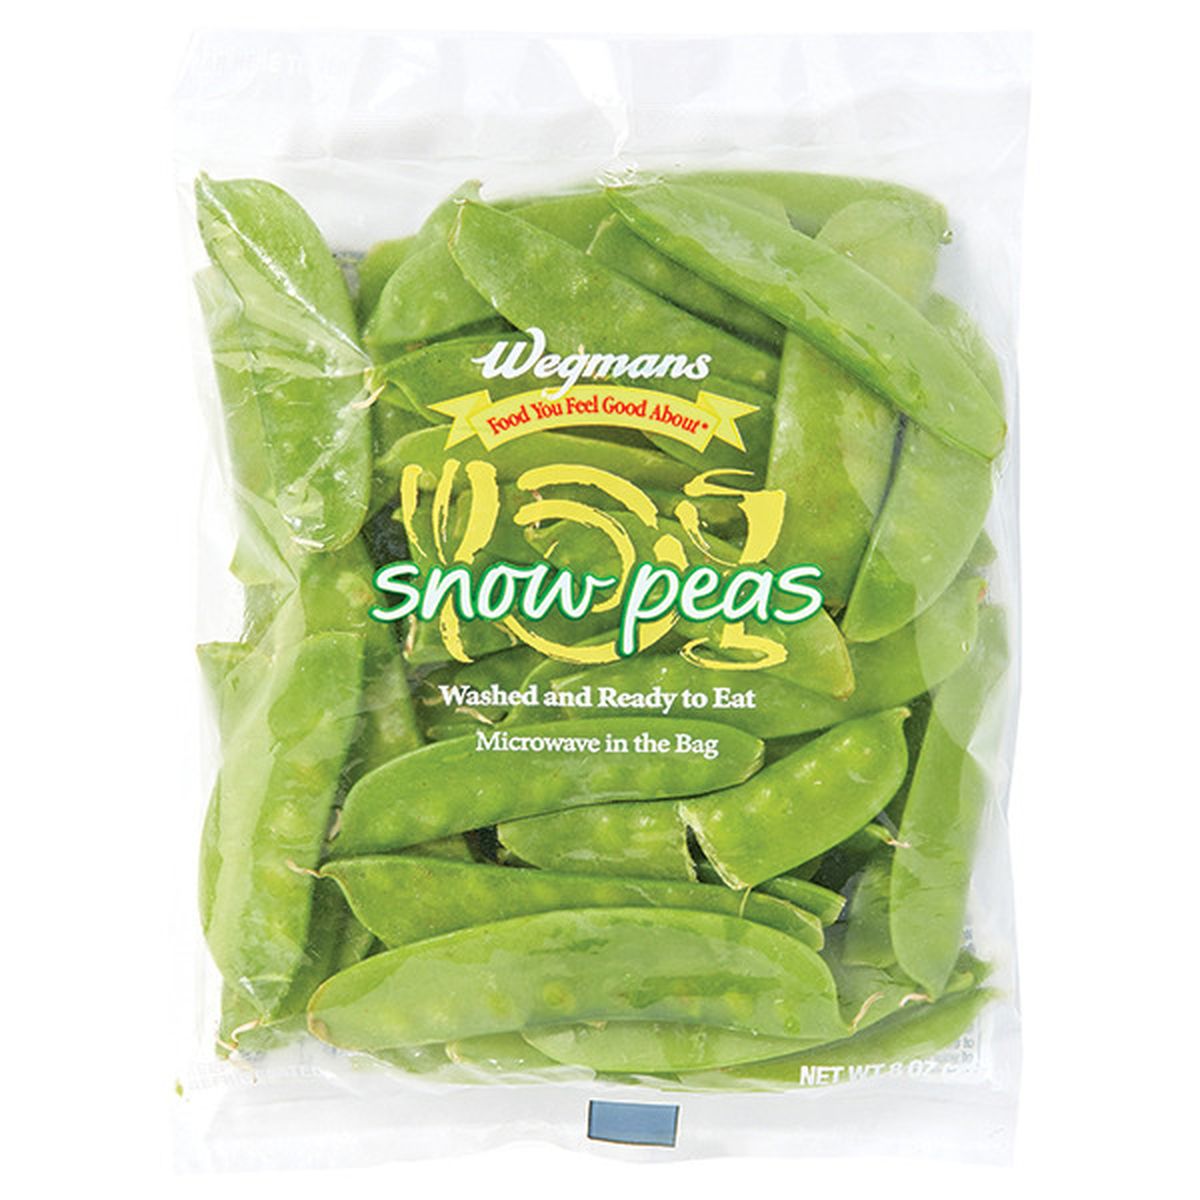 Calories in Wegmans Snow Peas